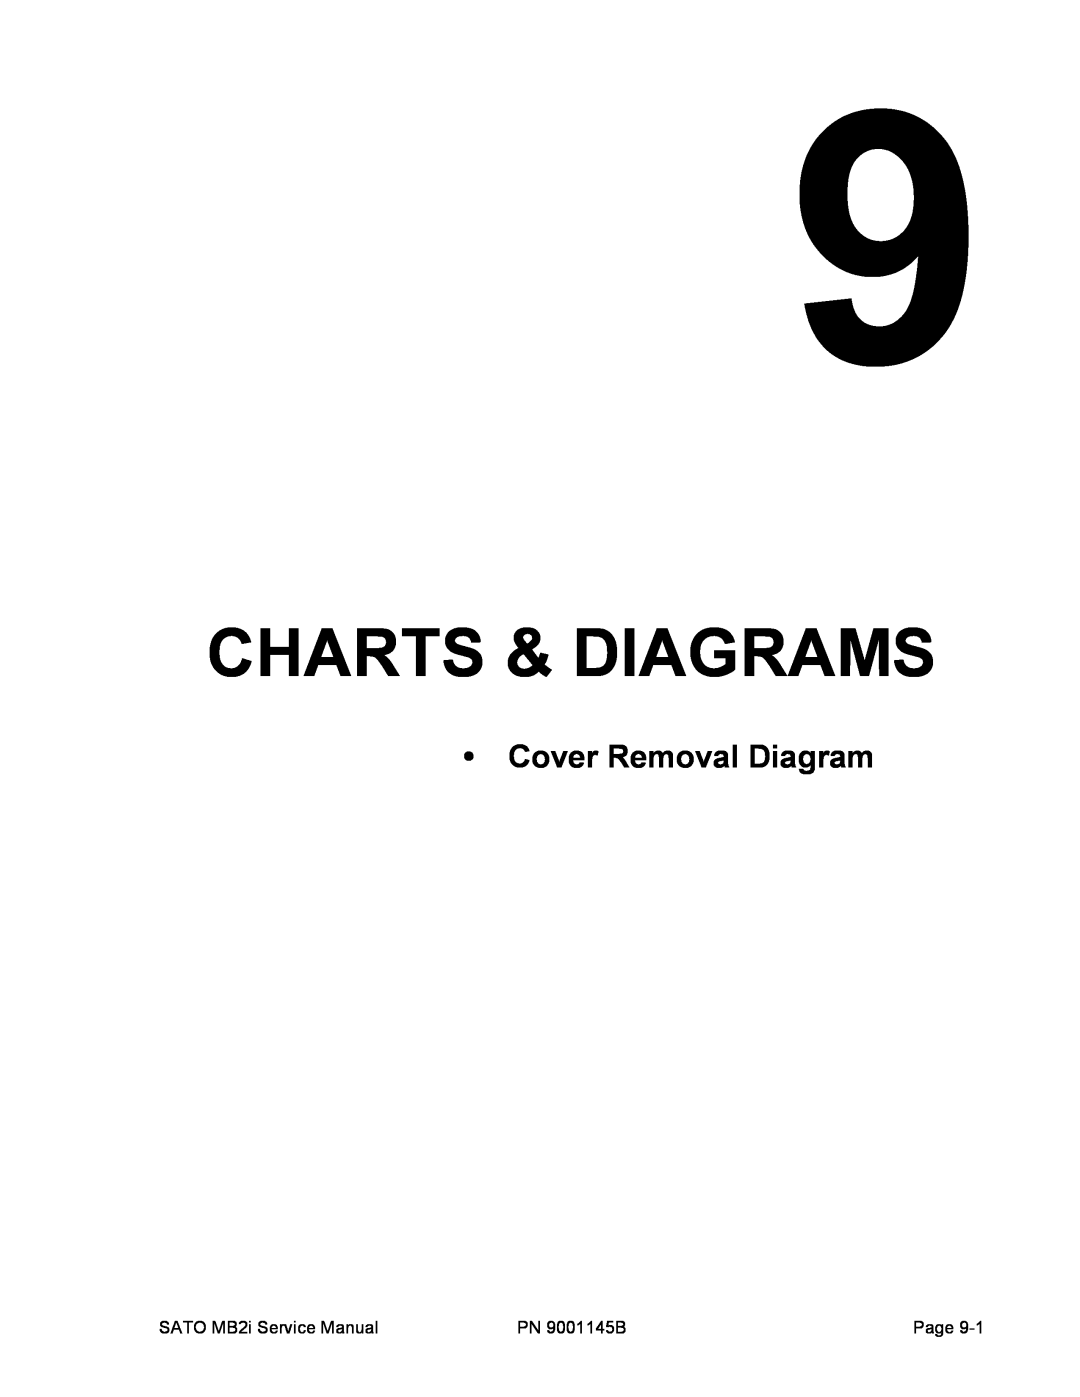 SATO 200i manual Charts & Diagrams, Cover Removal Diagram 